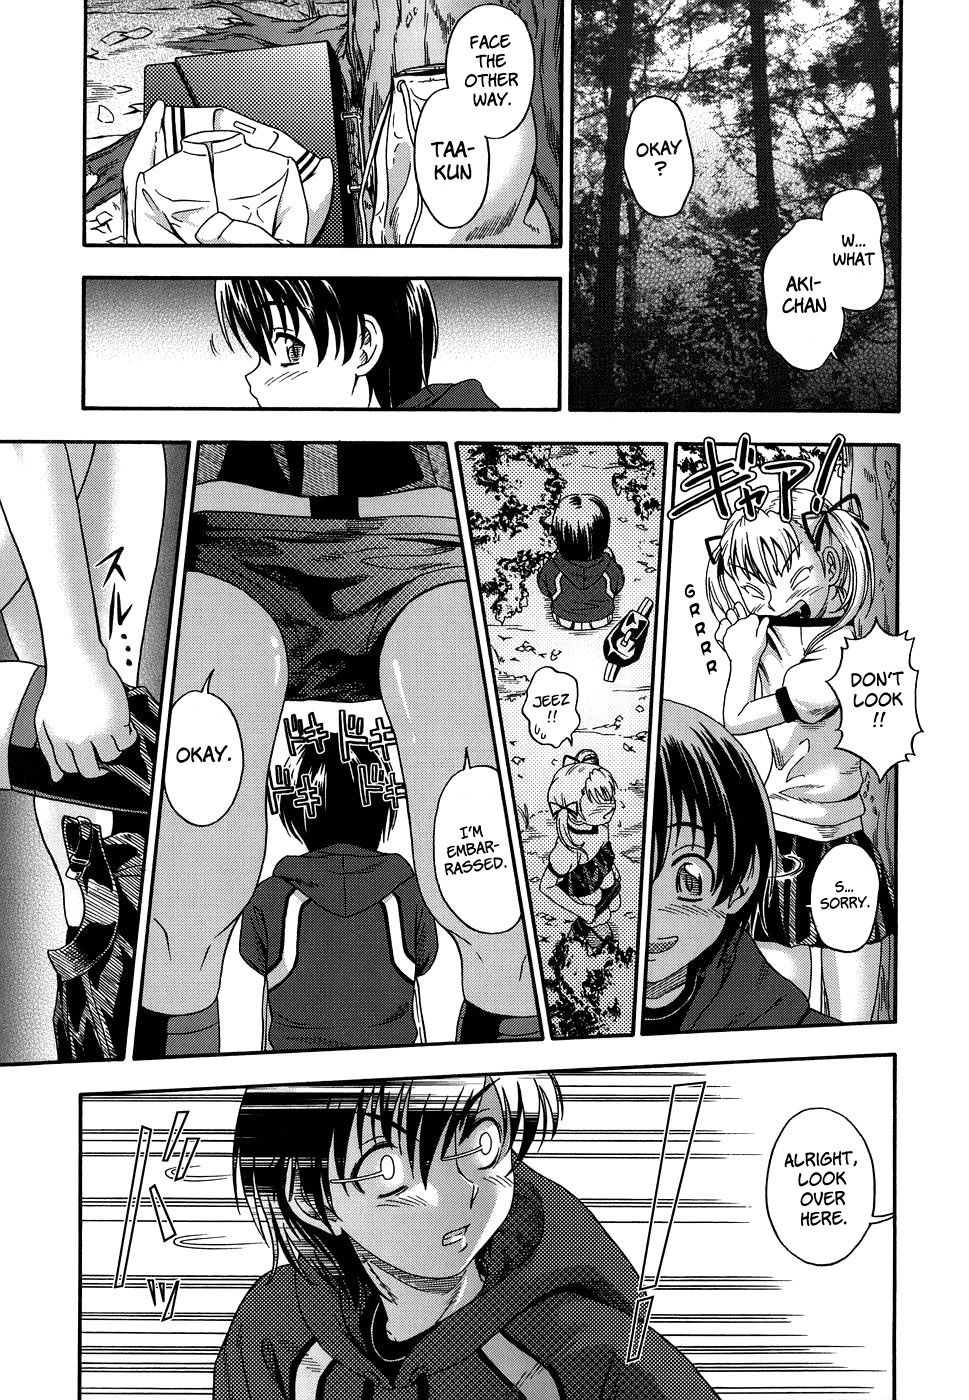 Hentai Manga Comic-Love Me Do-Chapter 7-Aki-Chan,Taa-kun And Bloomers-7